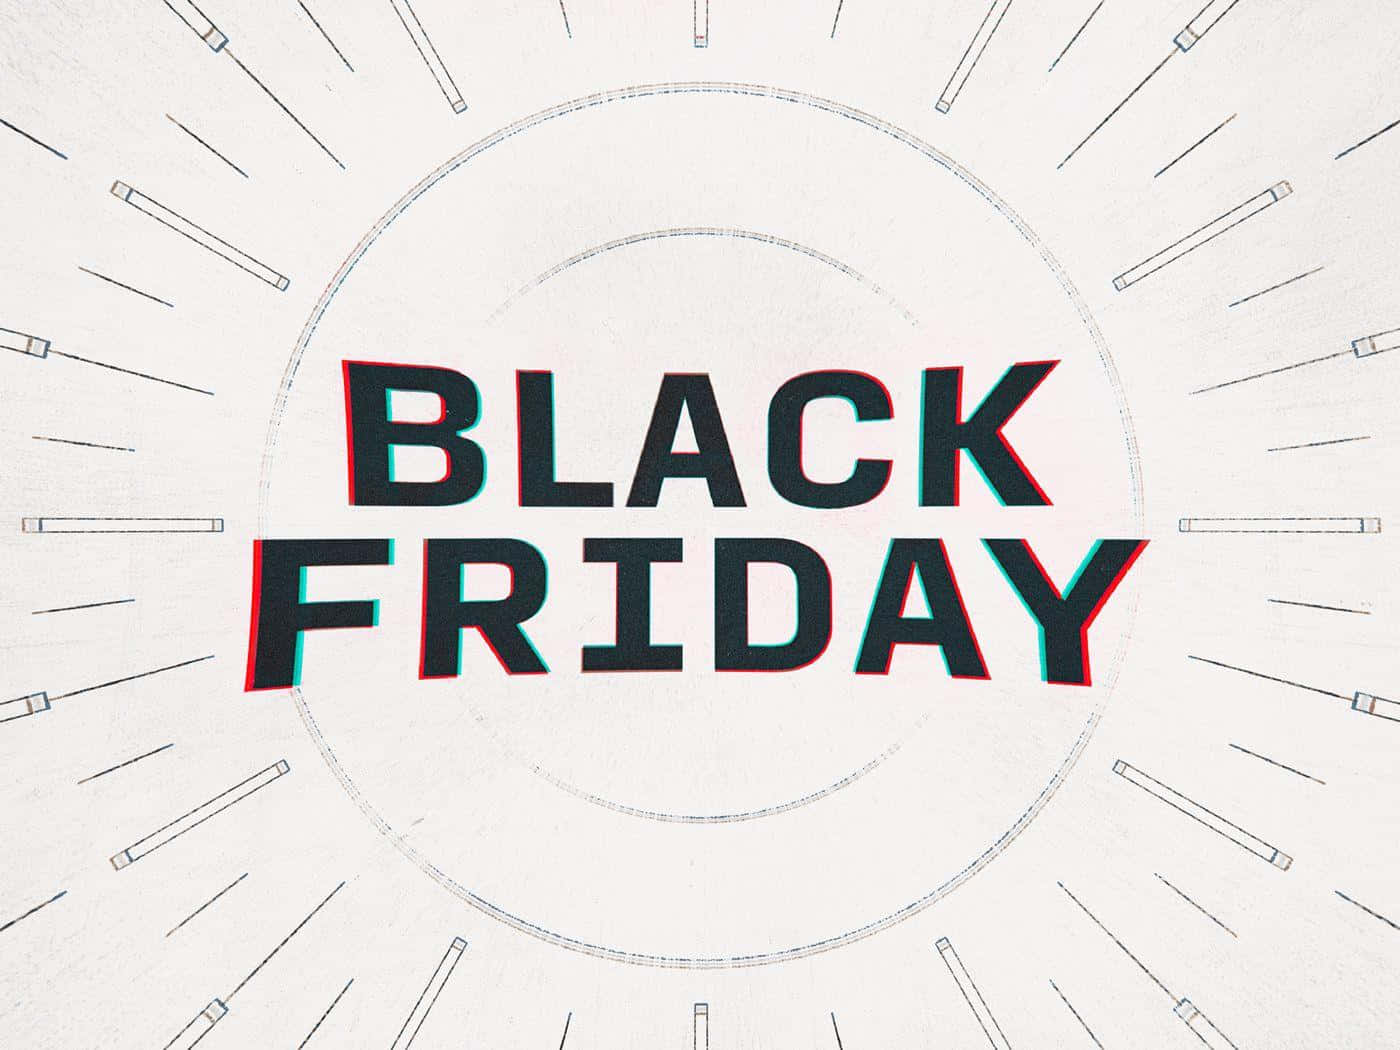 Blackfriday - En Black Friday-annonce.